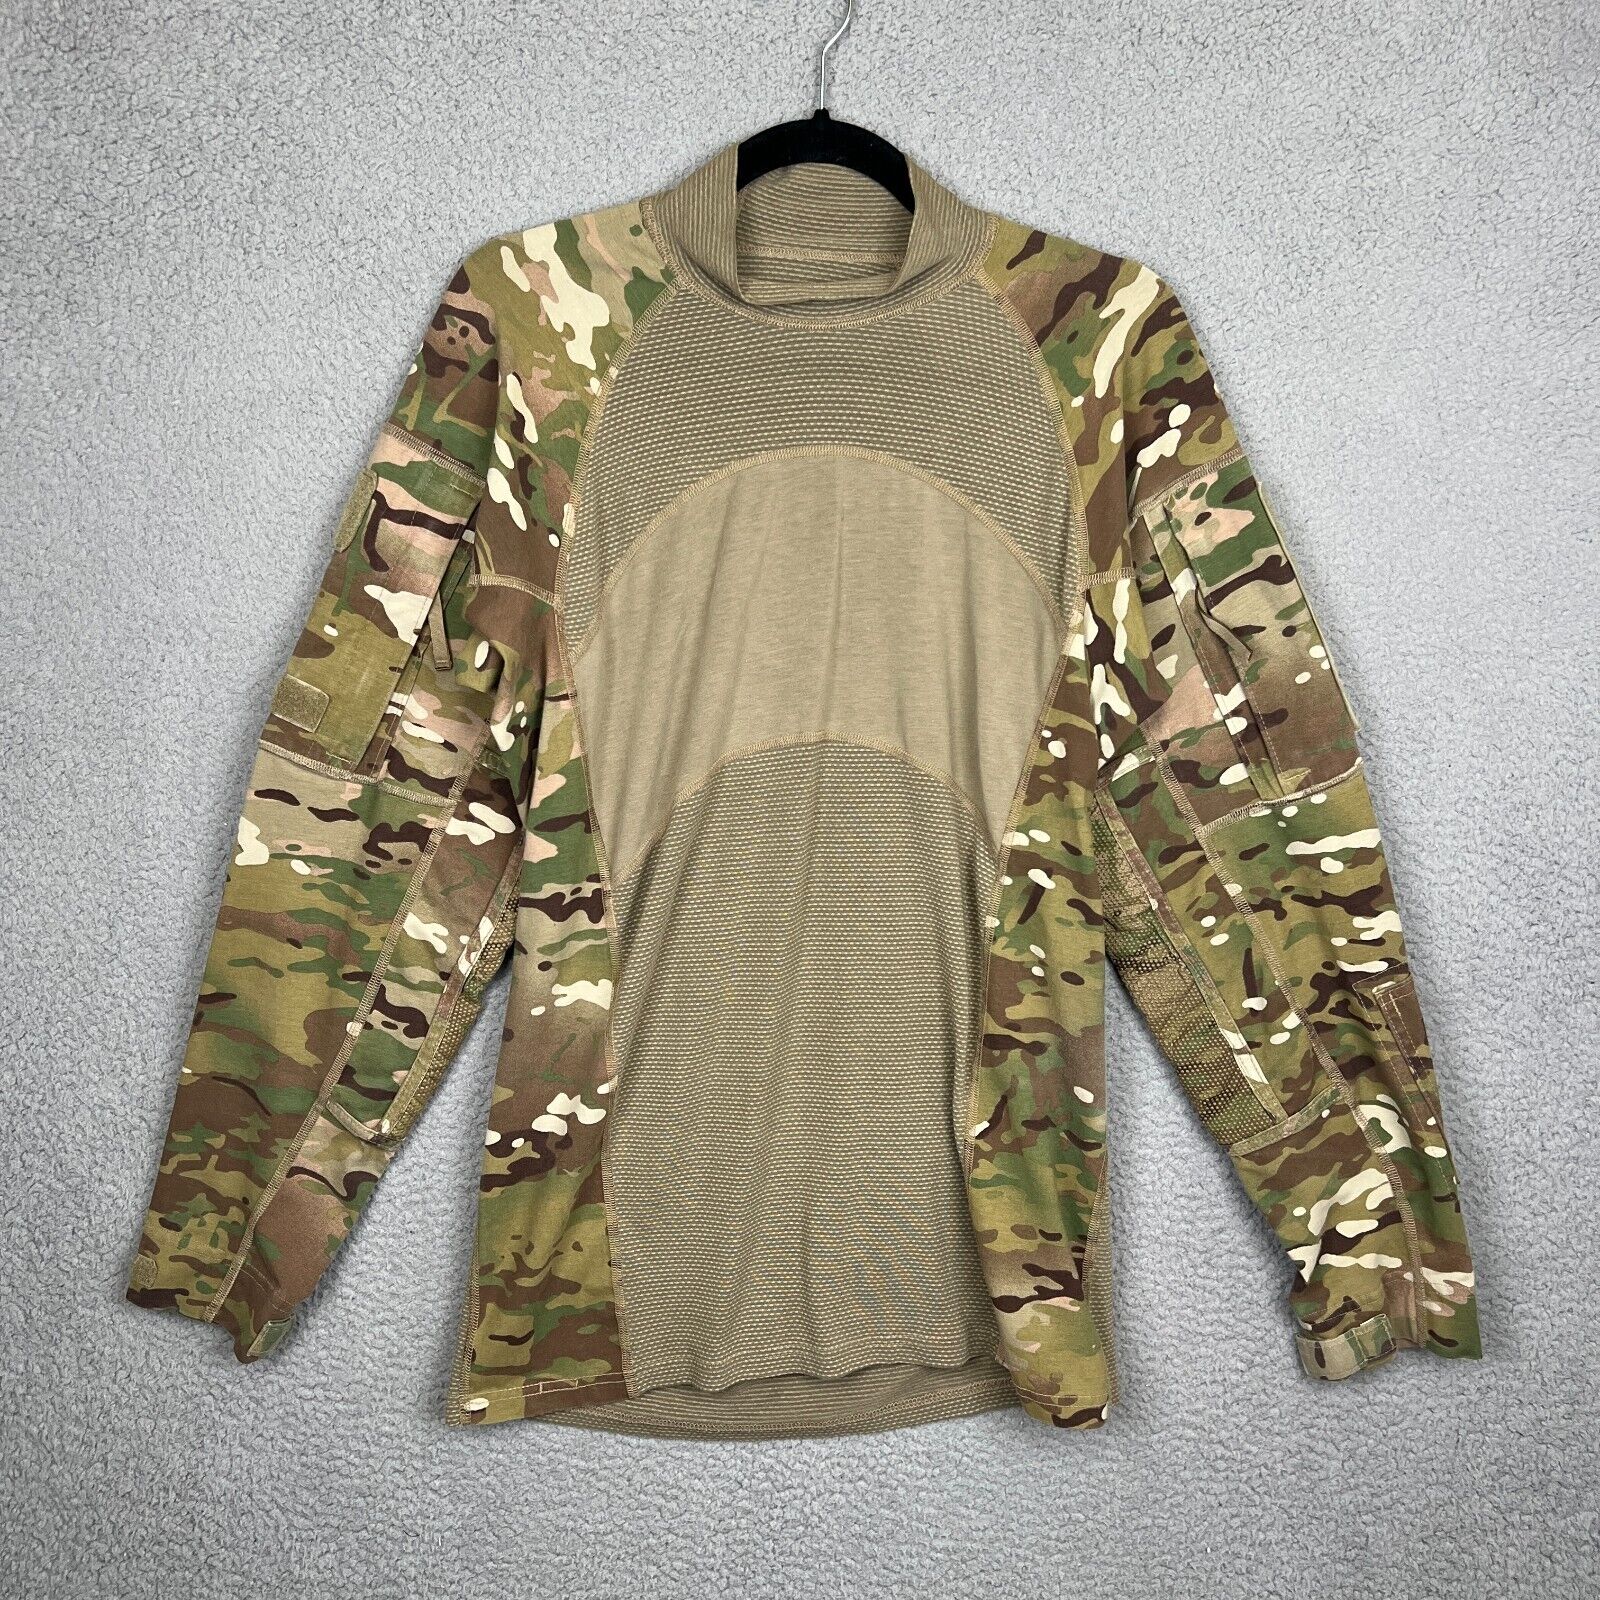 Massif Army Combat Shirt Mens M Brown Camo ACS Flame Resistant FR Military USA